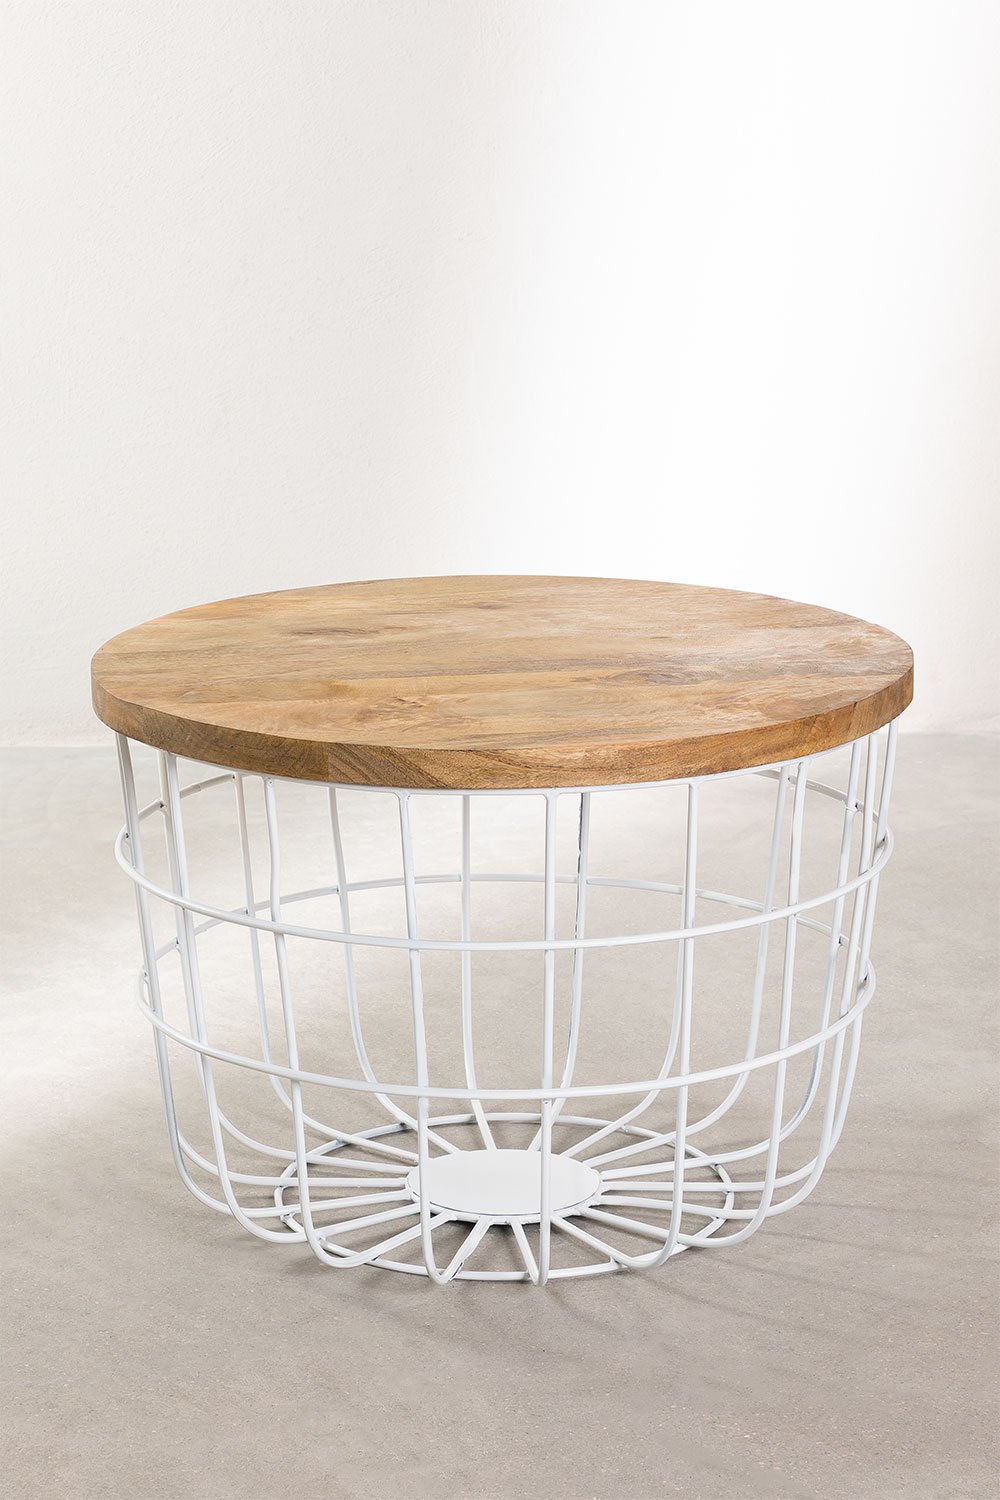 Ronde salontafel in mangohout en staal (Ø62 cm) Ket , galerij beeld 1